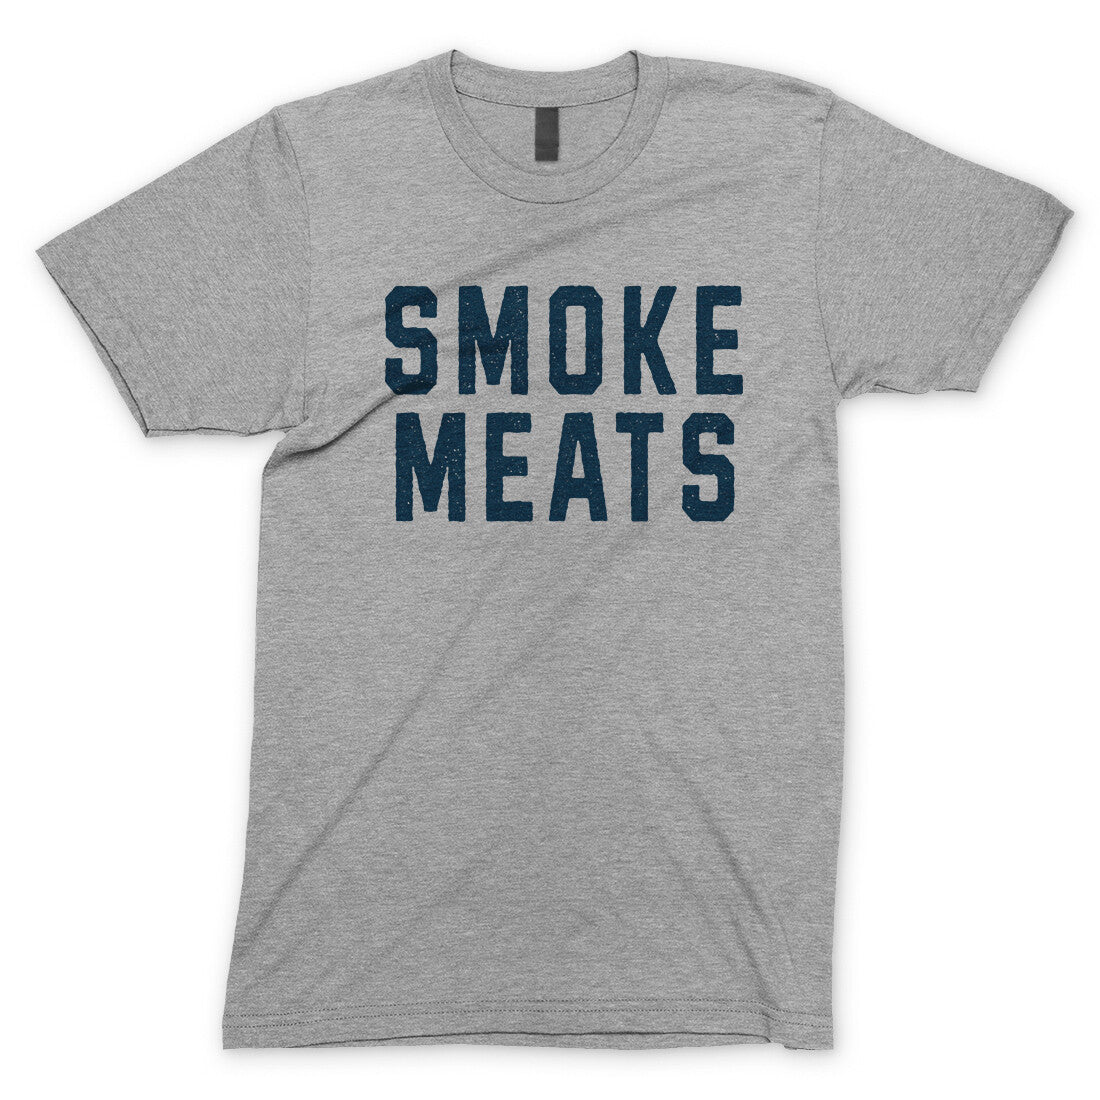 Smoke Meats in Sport Grey Color